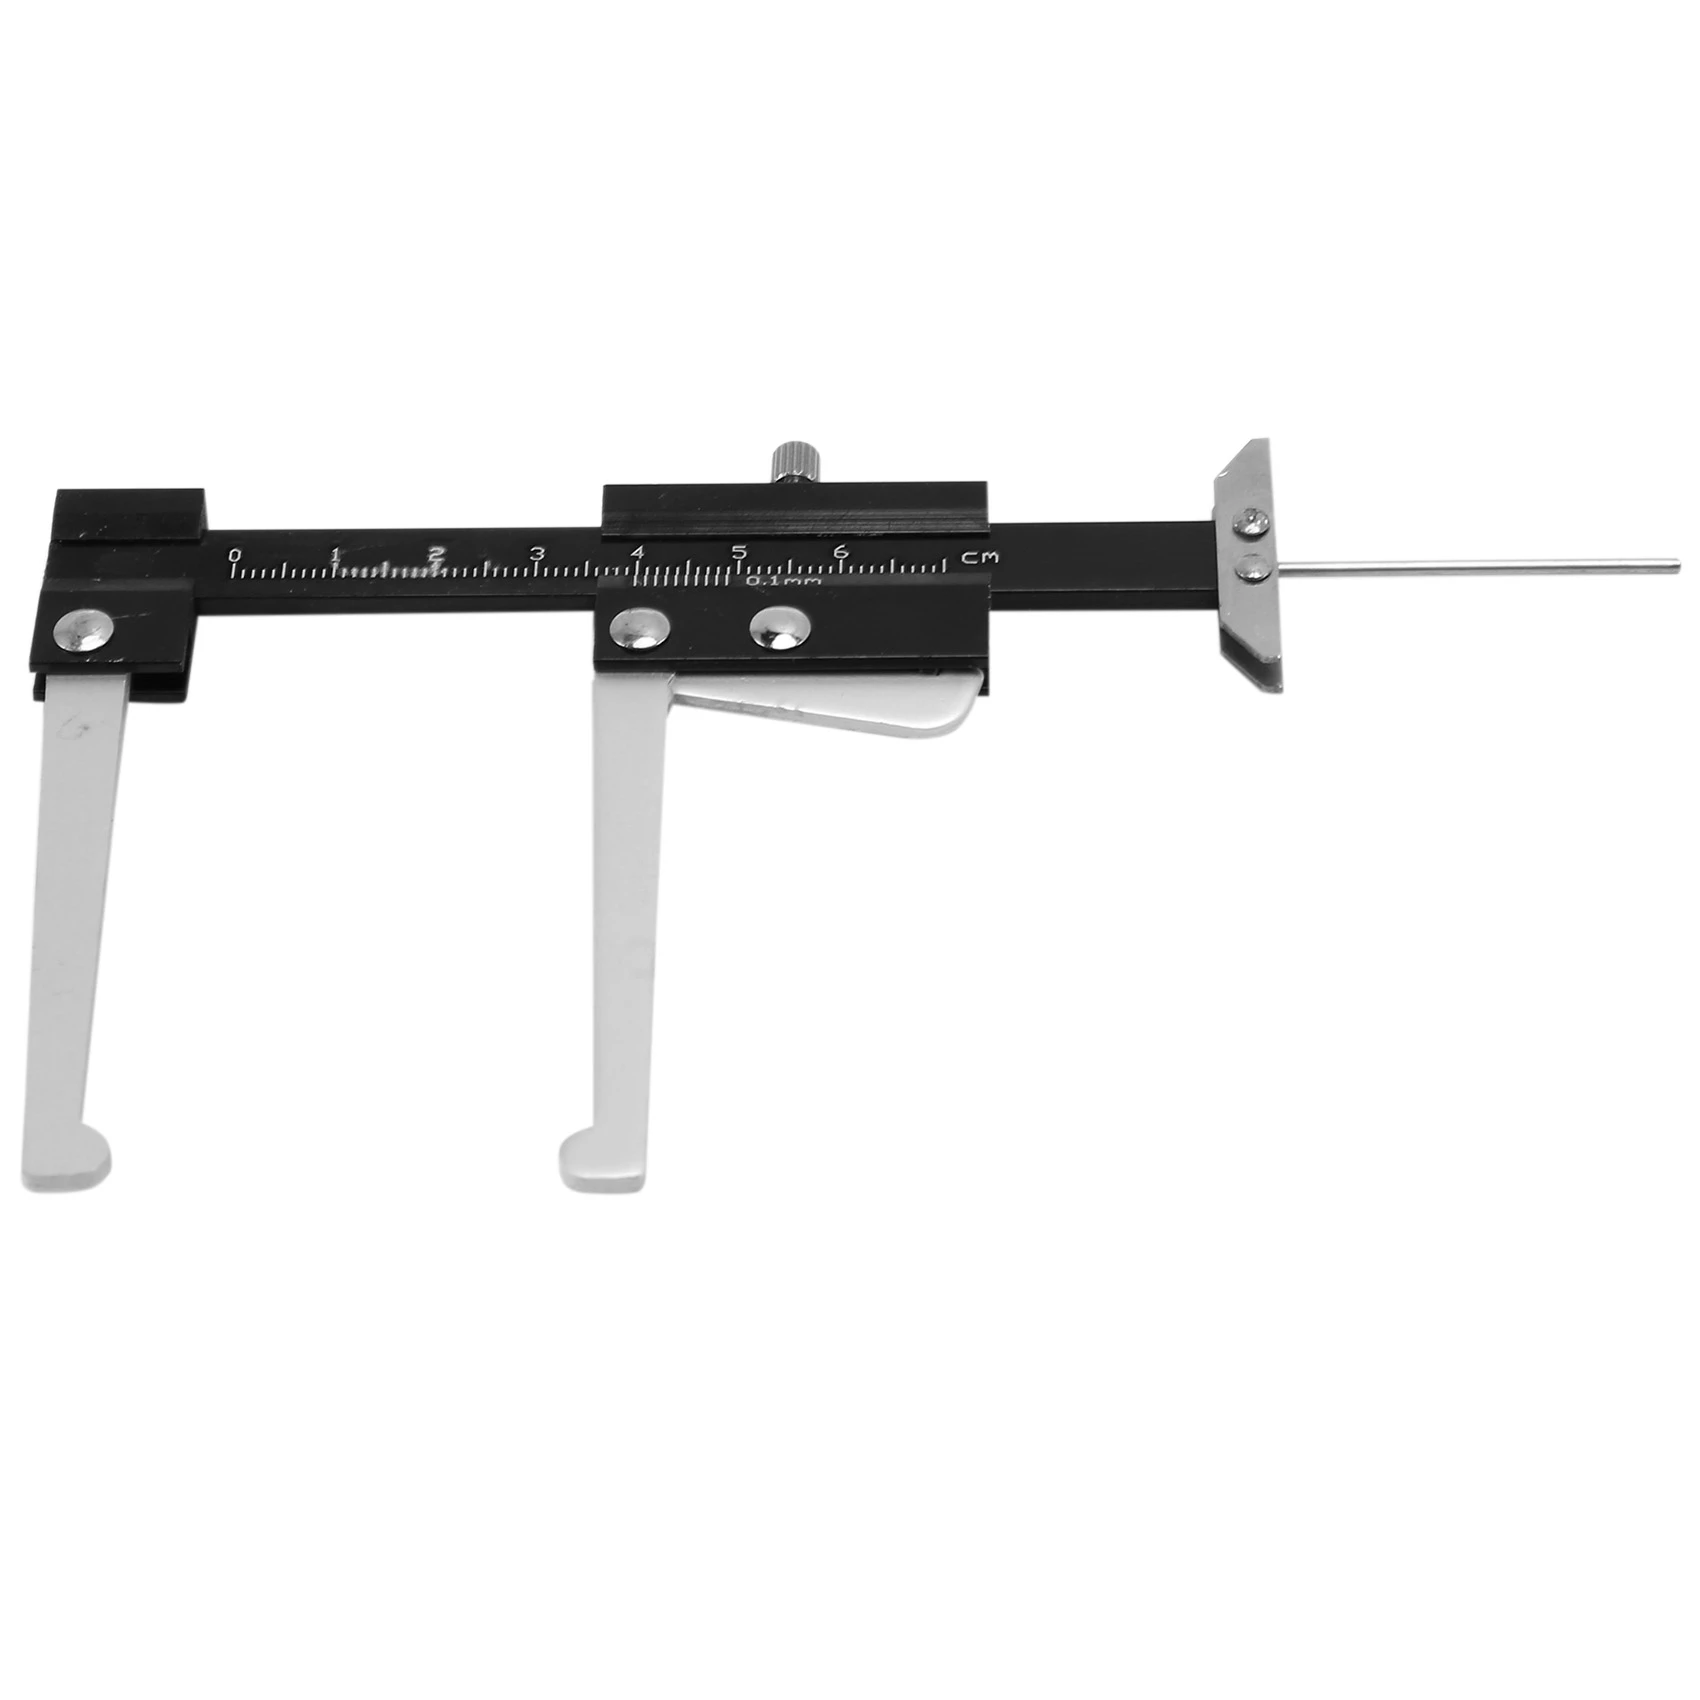 

Disc Brake Rotor Thickness Caliper 0-60mm Gauge Gage Micrometer Measuring Tool